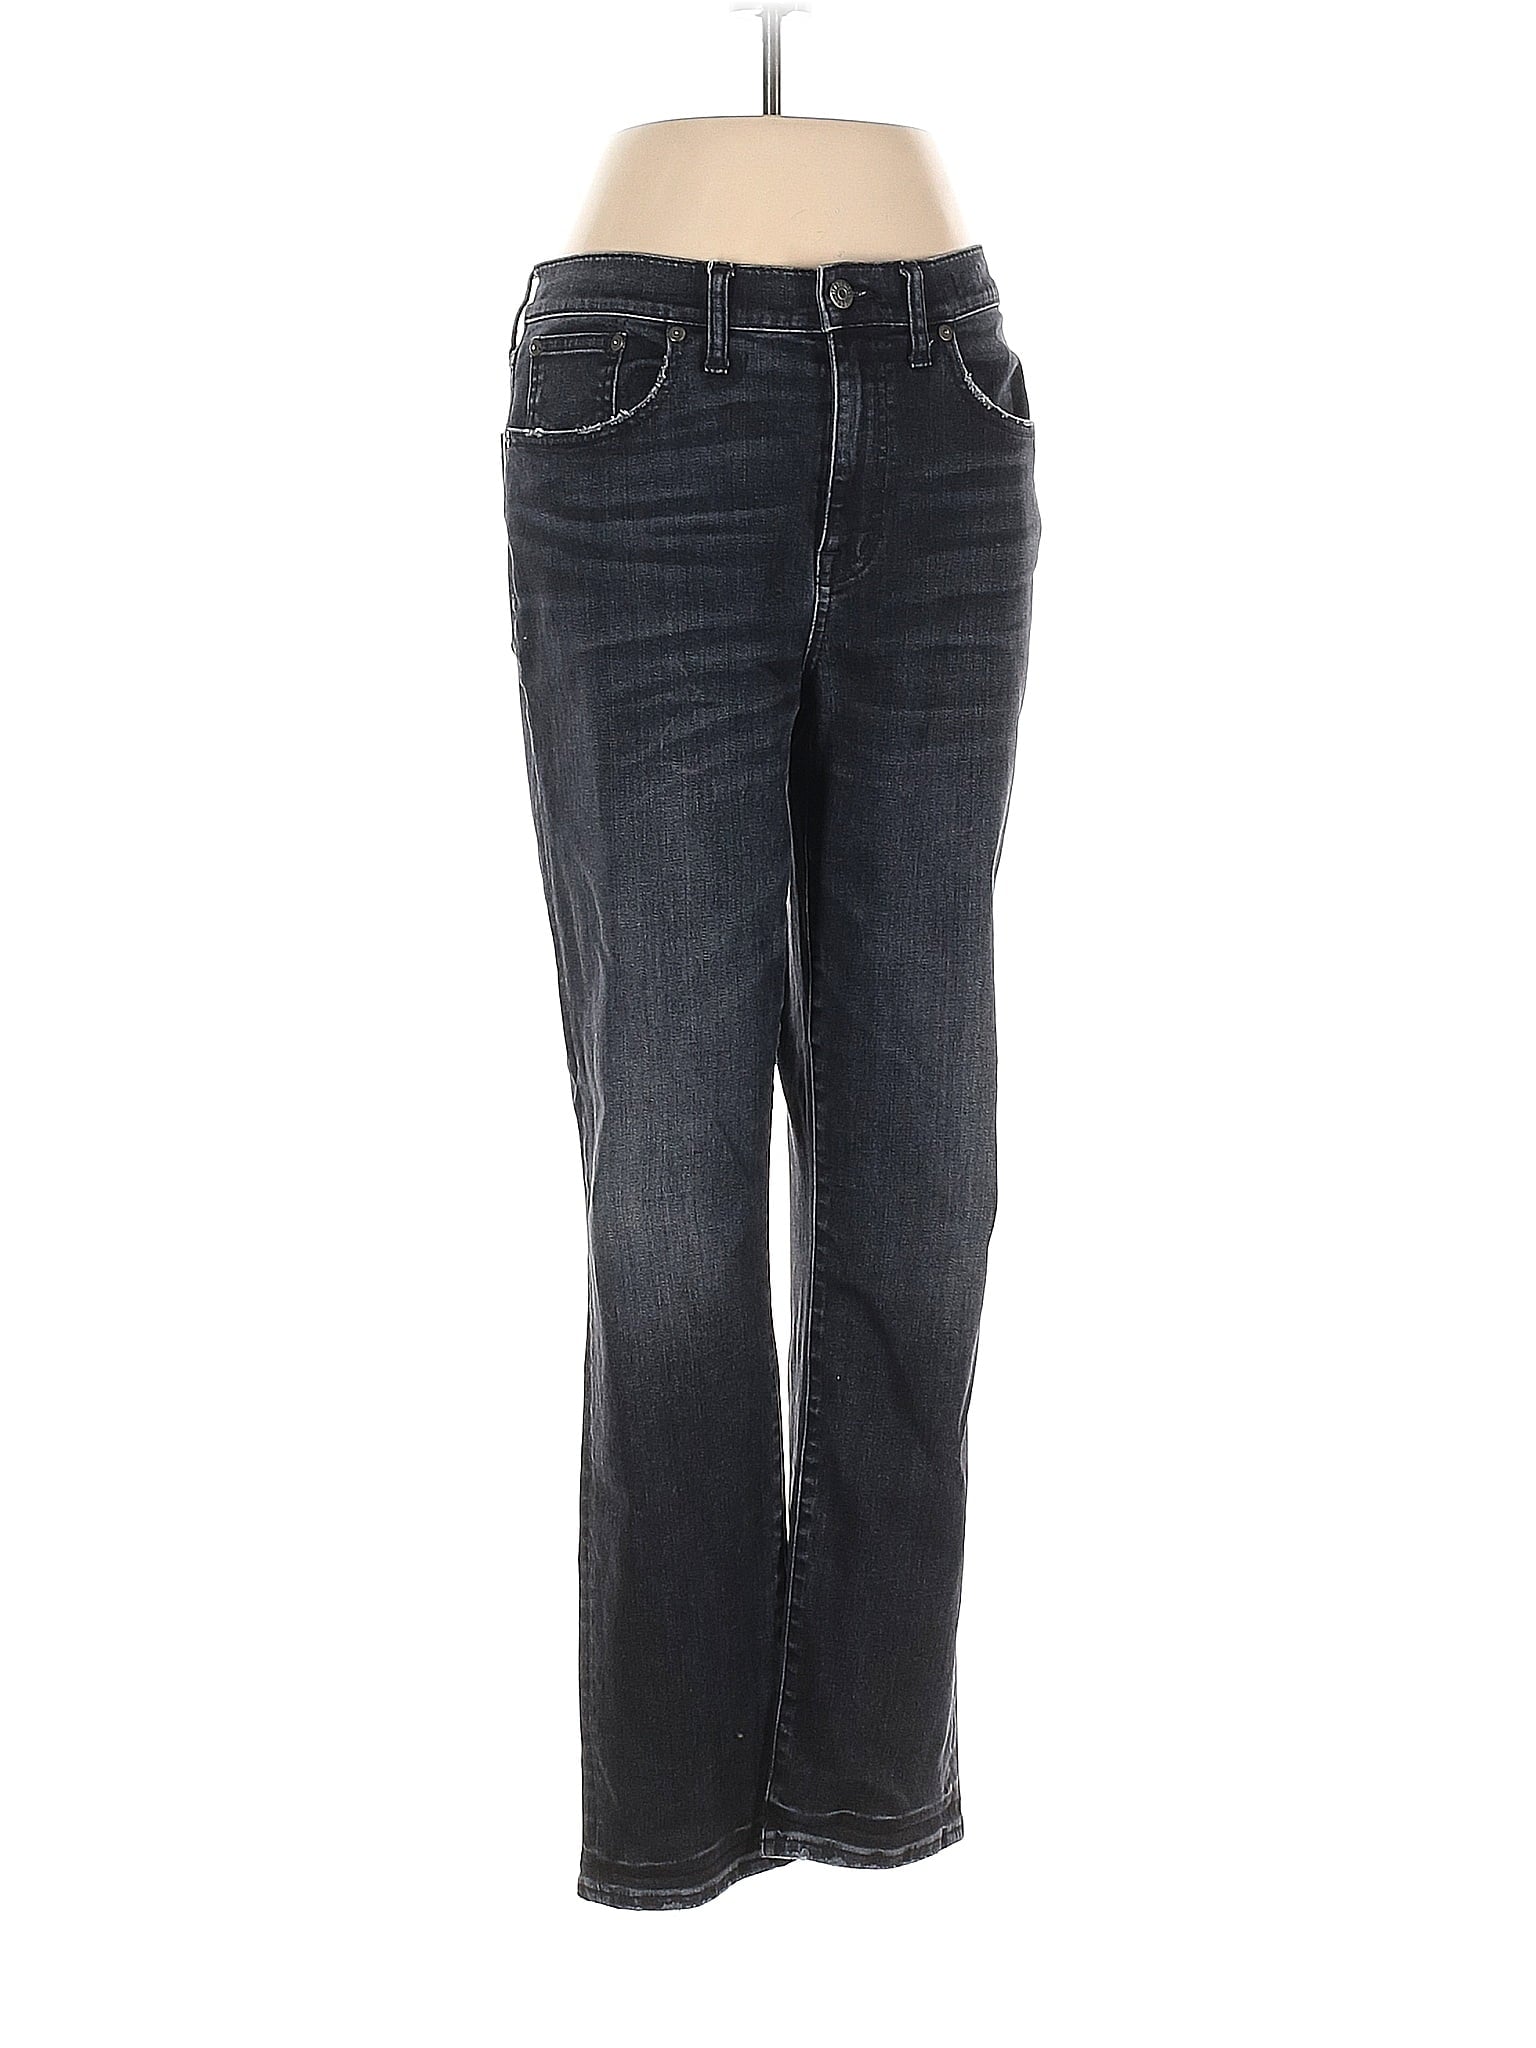 High-Rise Boyjeans Jeans in Dark Wash waist size - 28